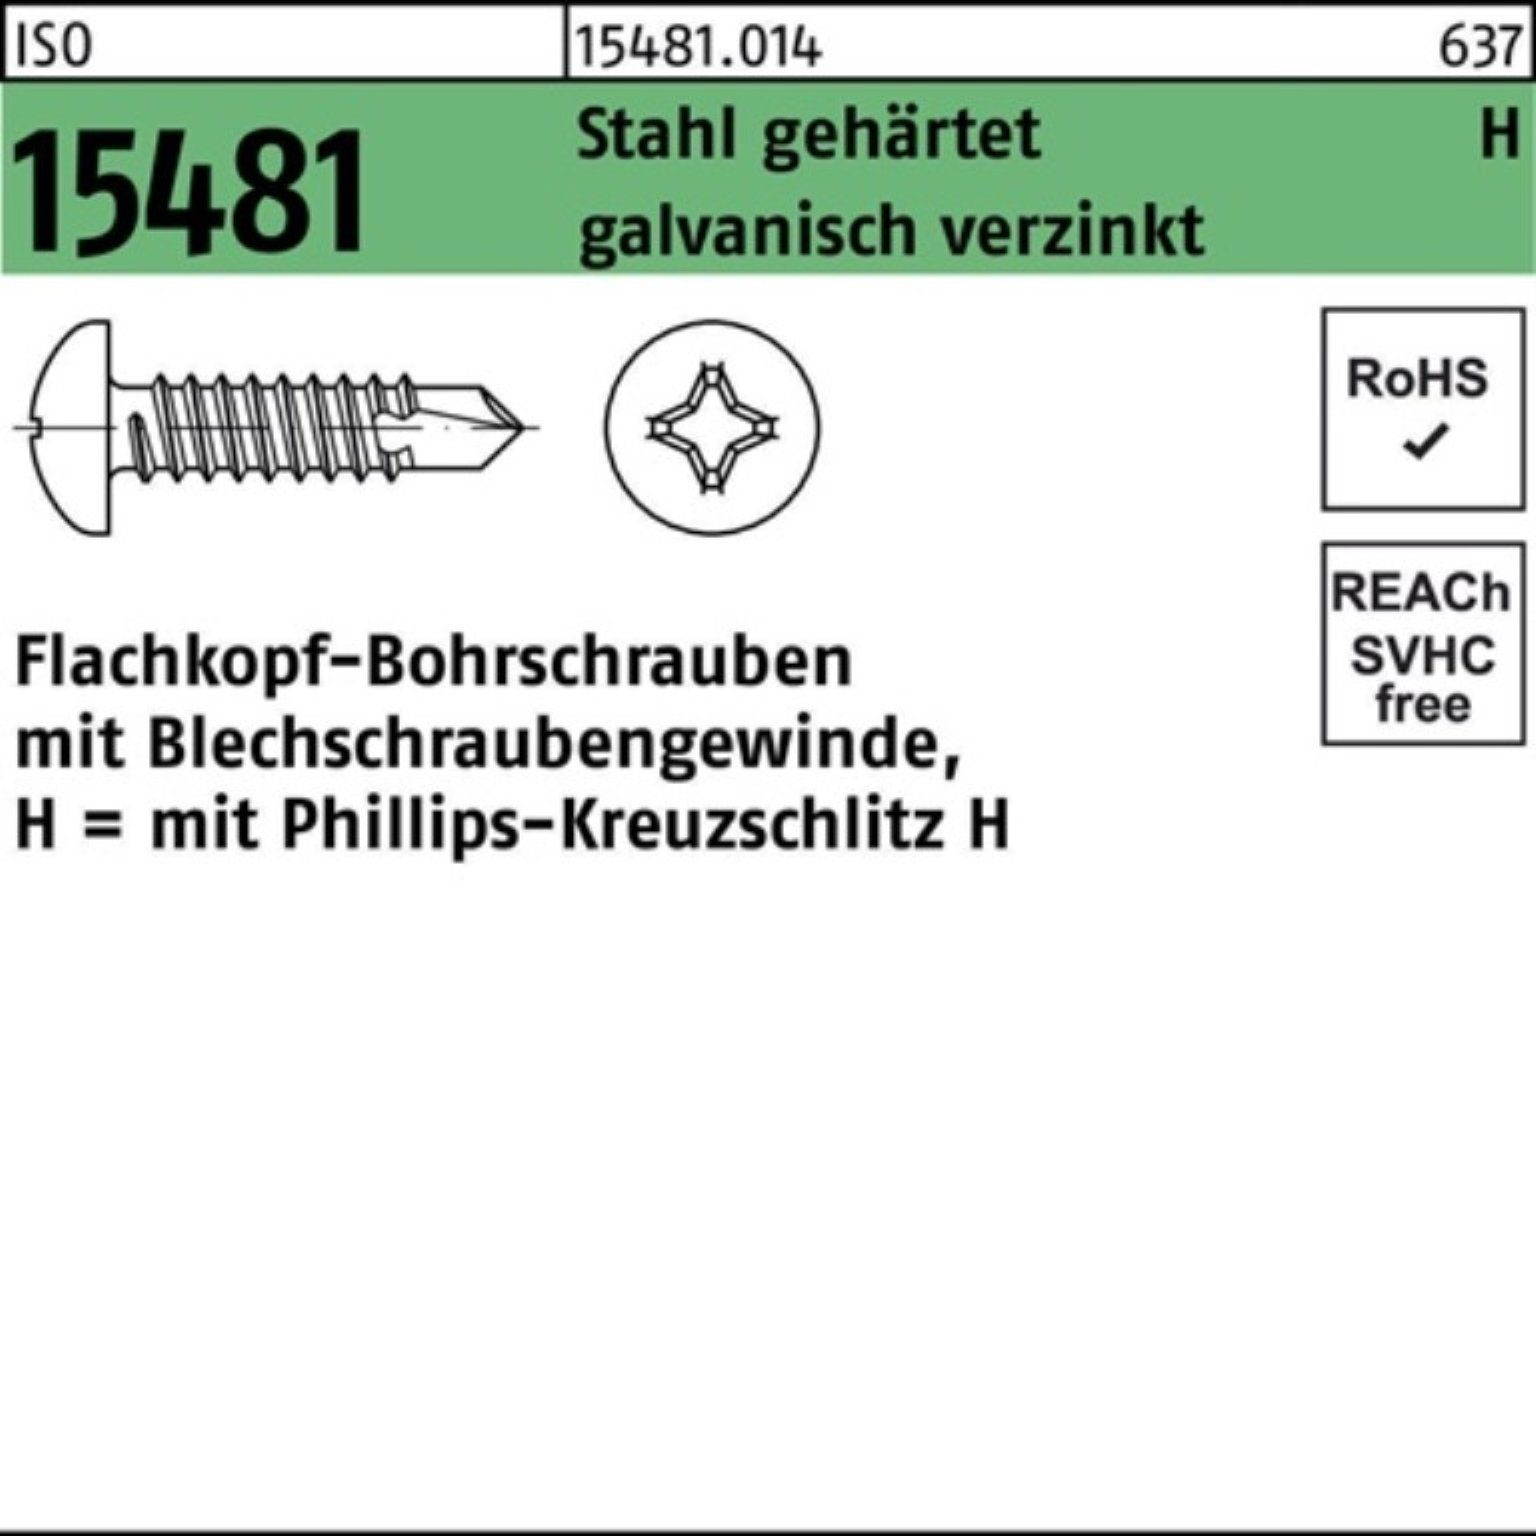 Reyher 500er ISO FLAKObohrschraube PH Bohrschraube 6,3x50-H Pack Stahl 15481 gehärtet ST